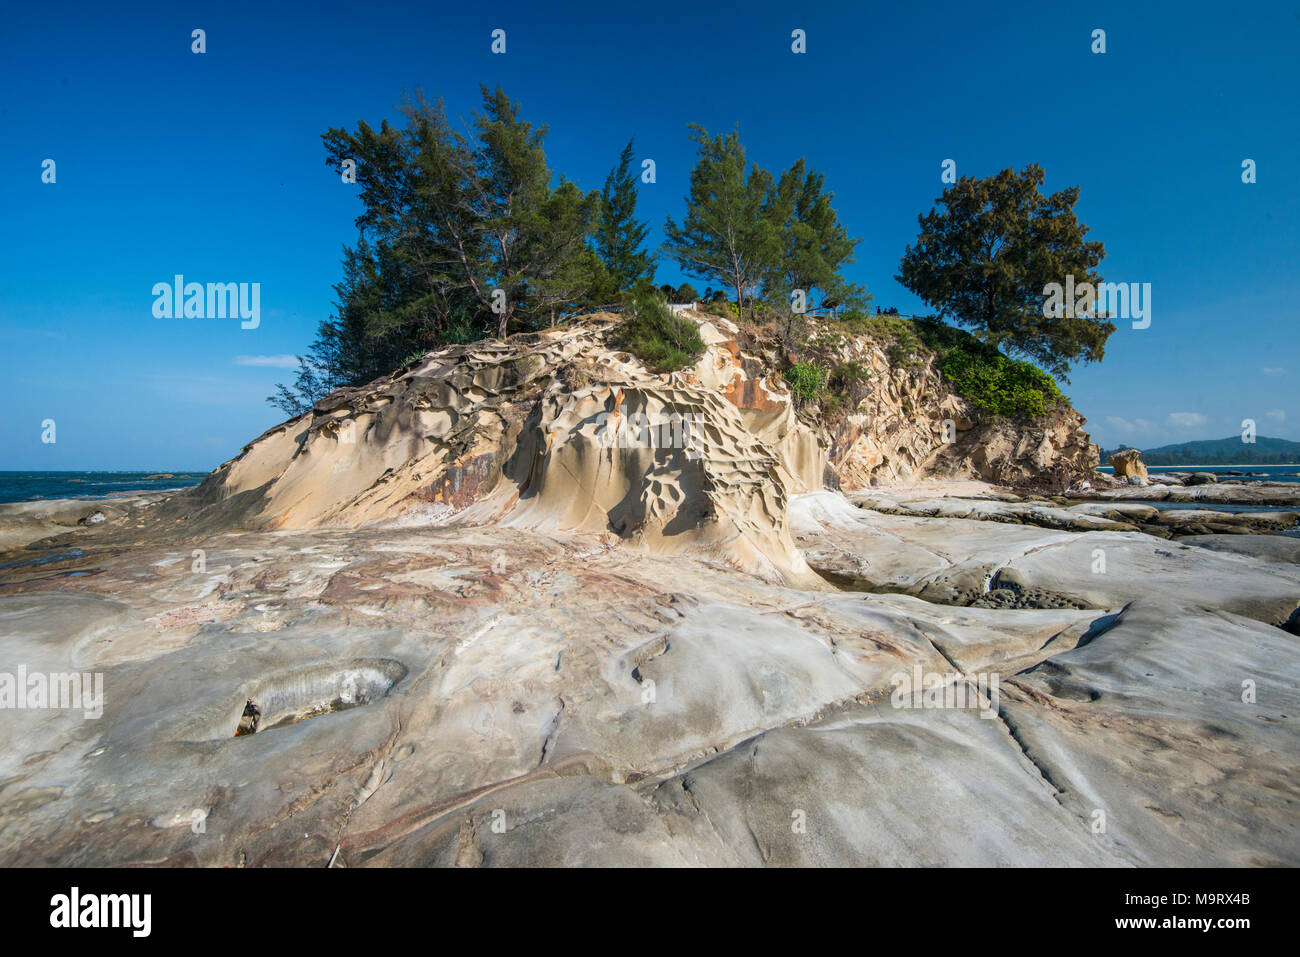 Rocks of the tip of Borneo, Kudat, Sabah, Malaysia, Borneo, Stock Photo